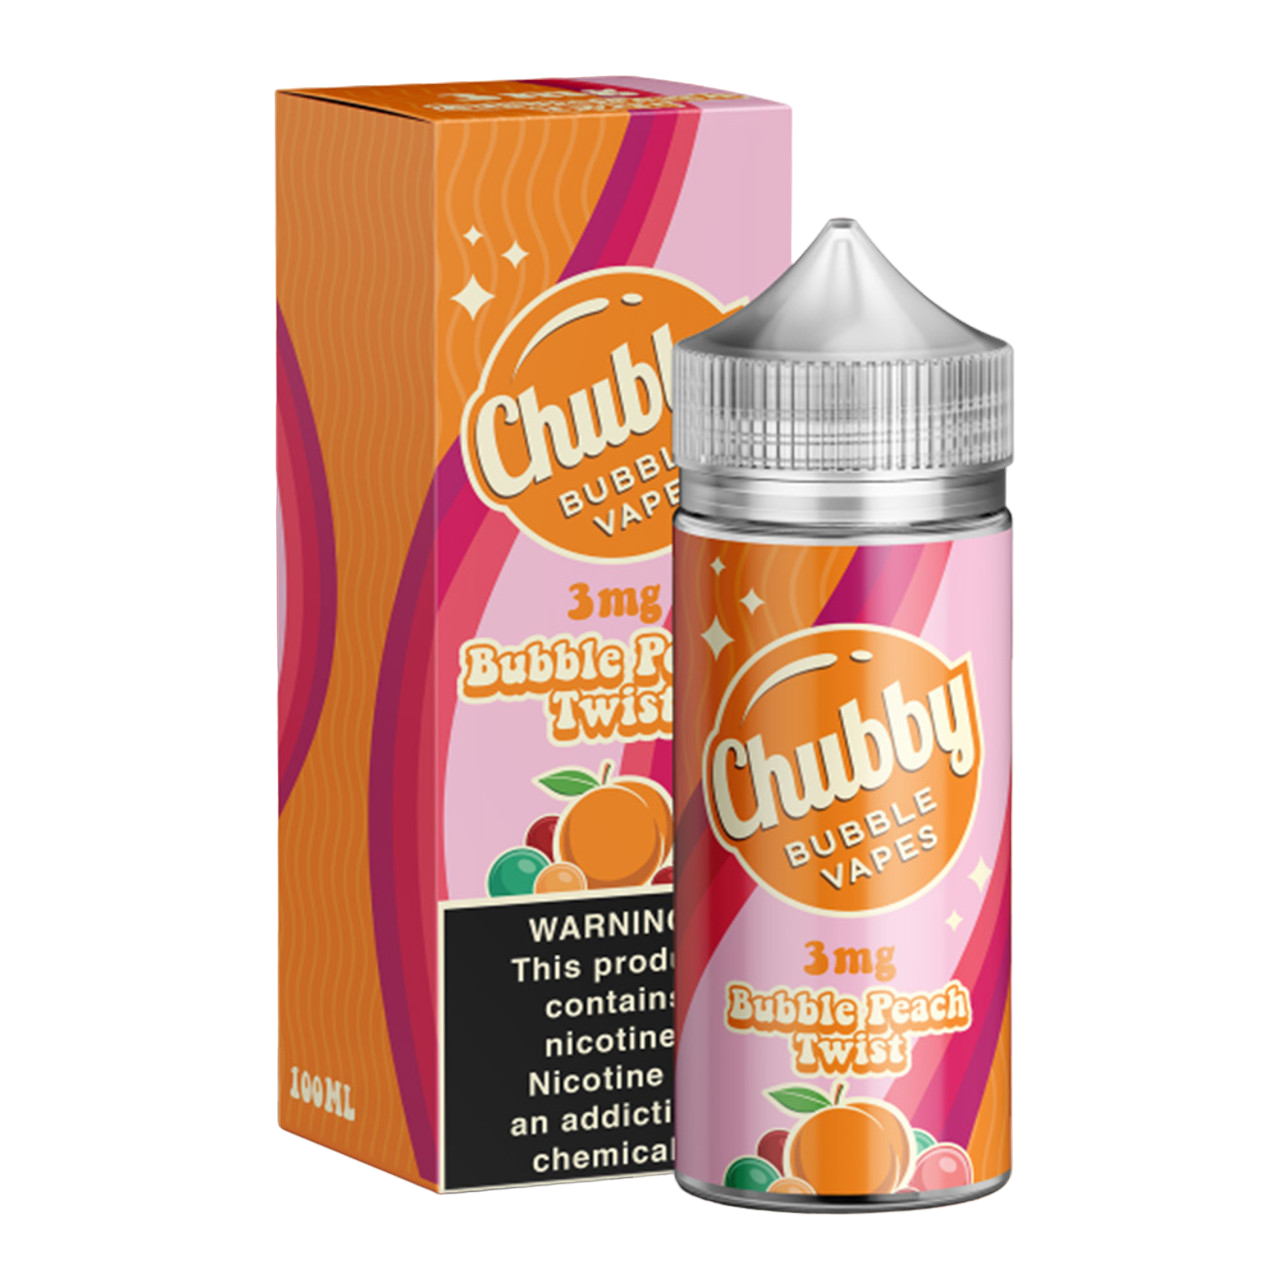 Chubby Bubble Vapes Nicotine E-Liquid 100ML Bubble Peach Twist